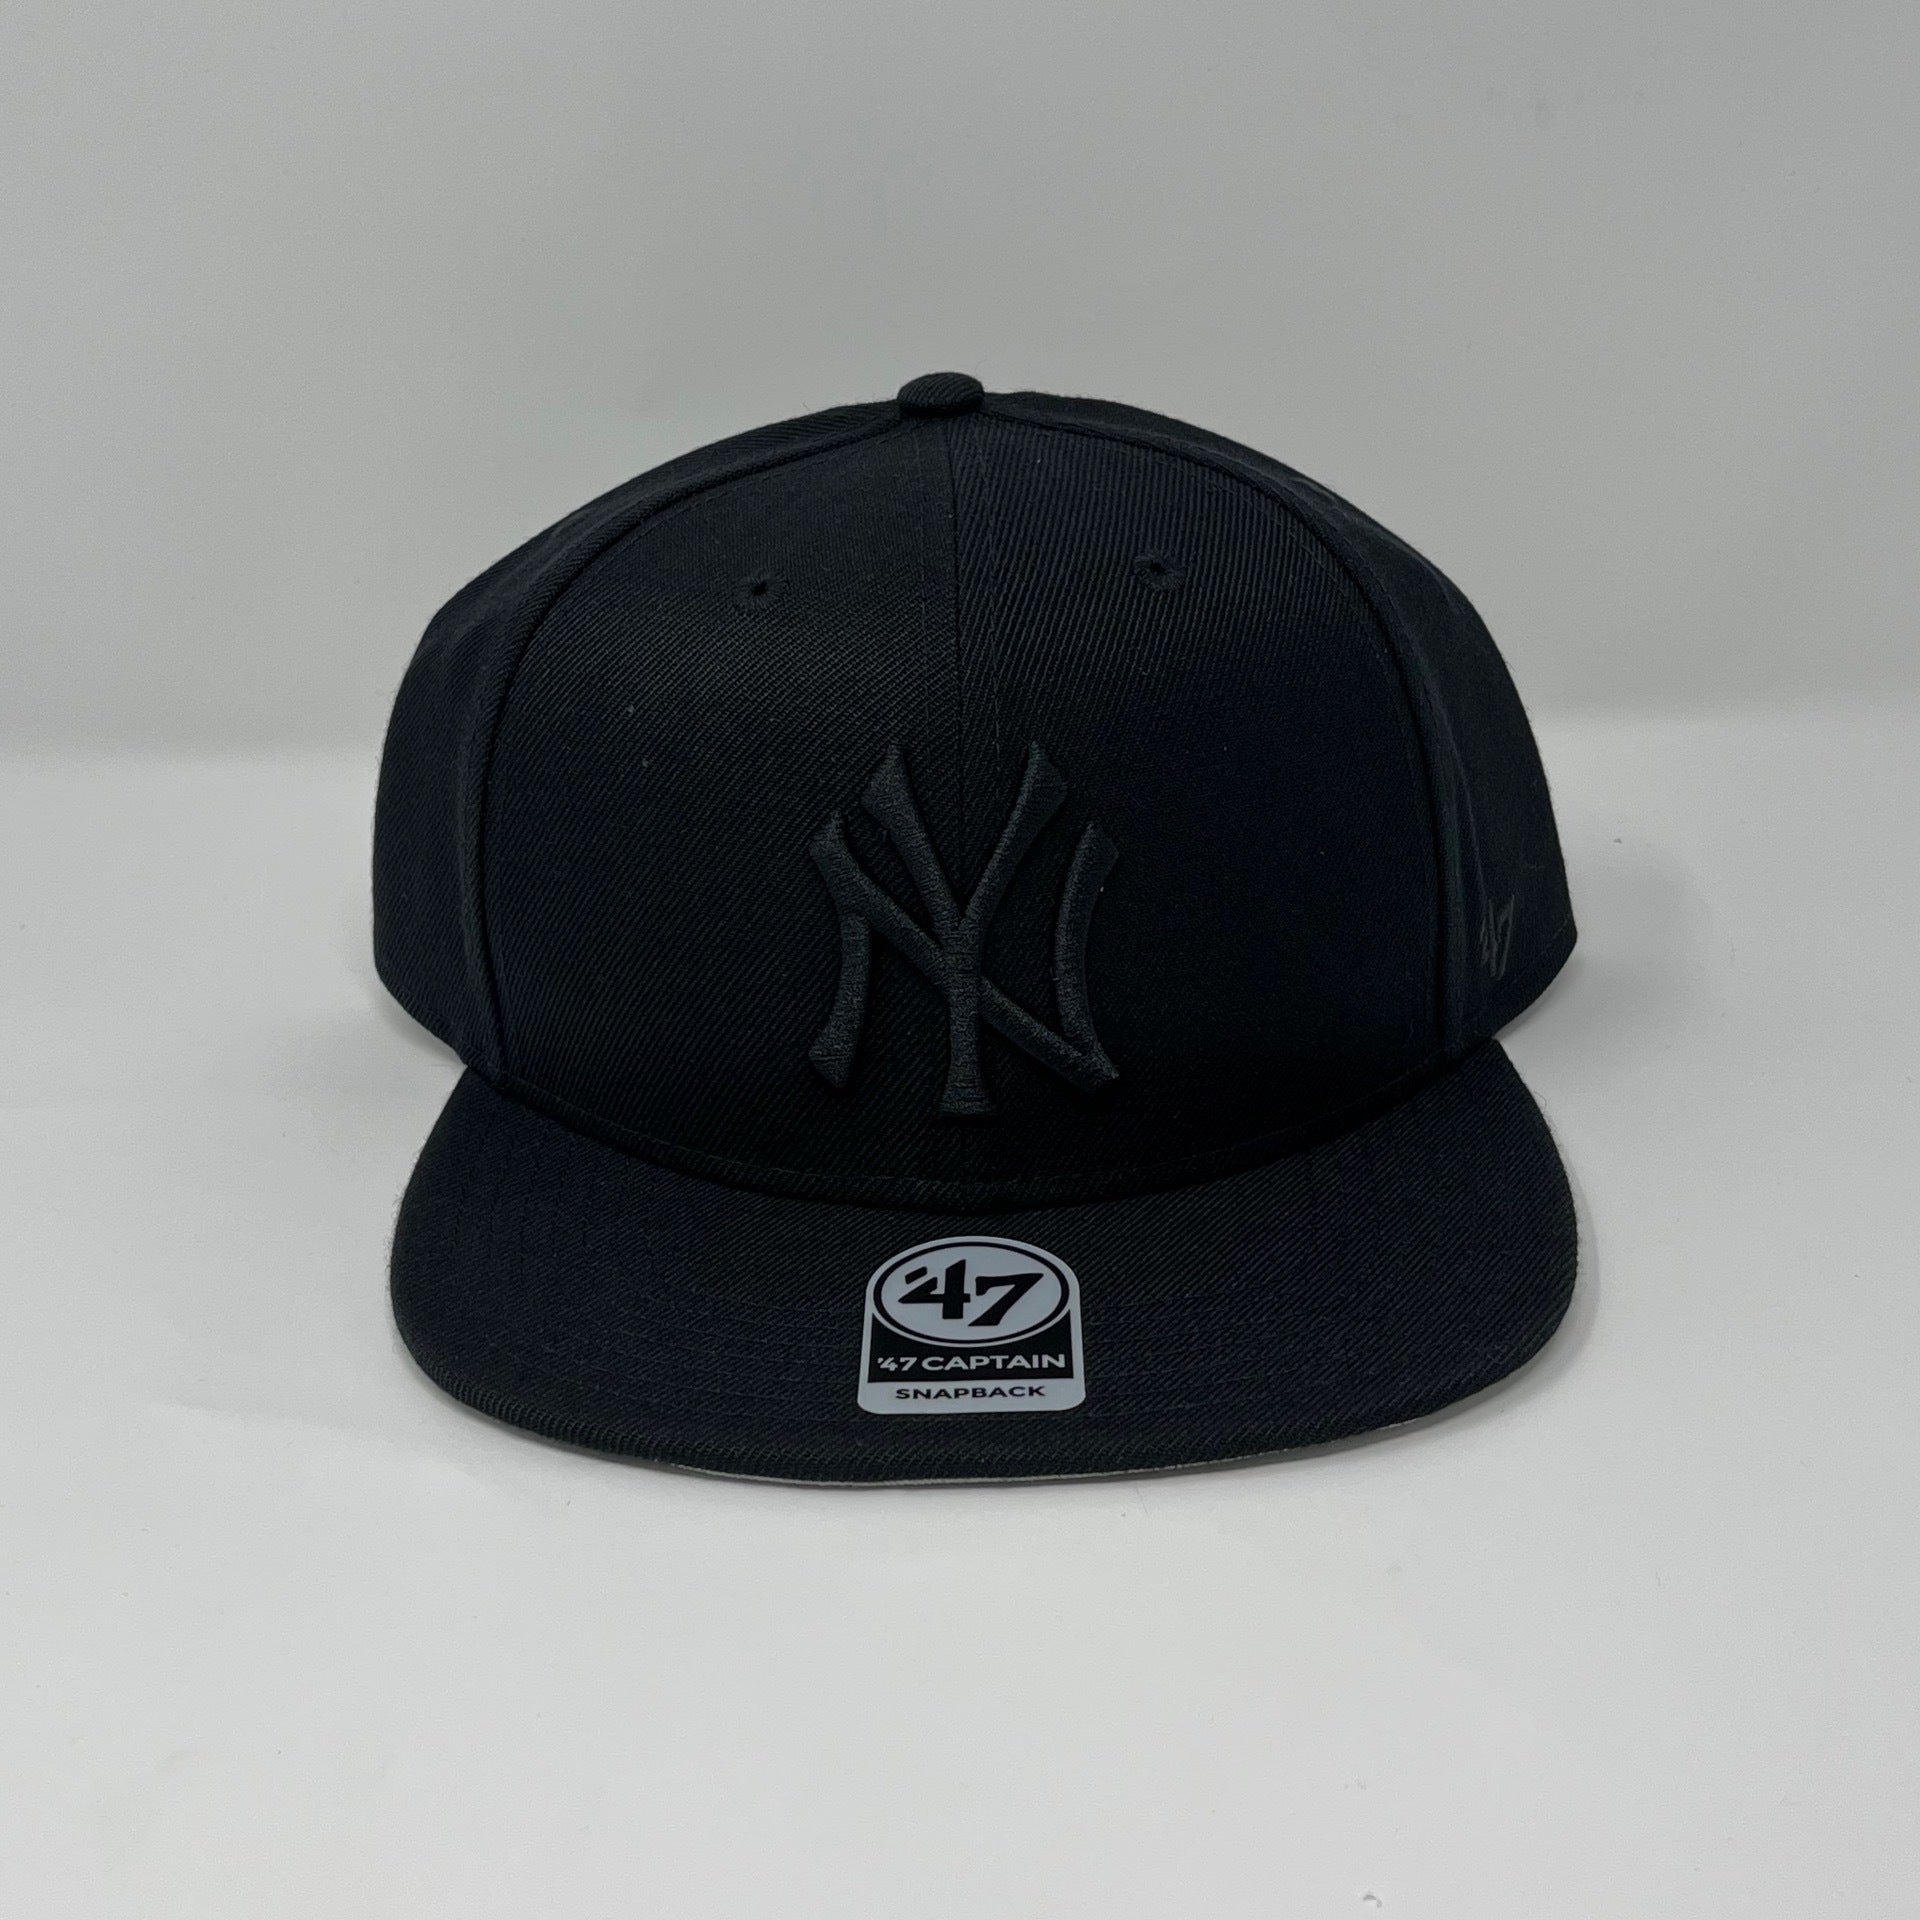 New York Yankees 47 Mvp Khaki/Black Adjustable - 47 Brand 